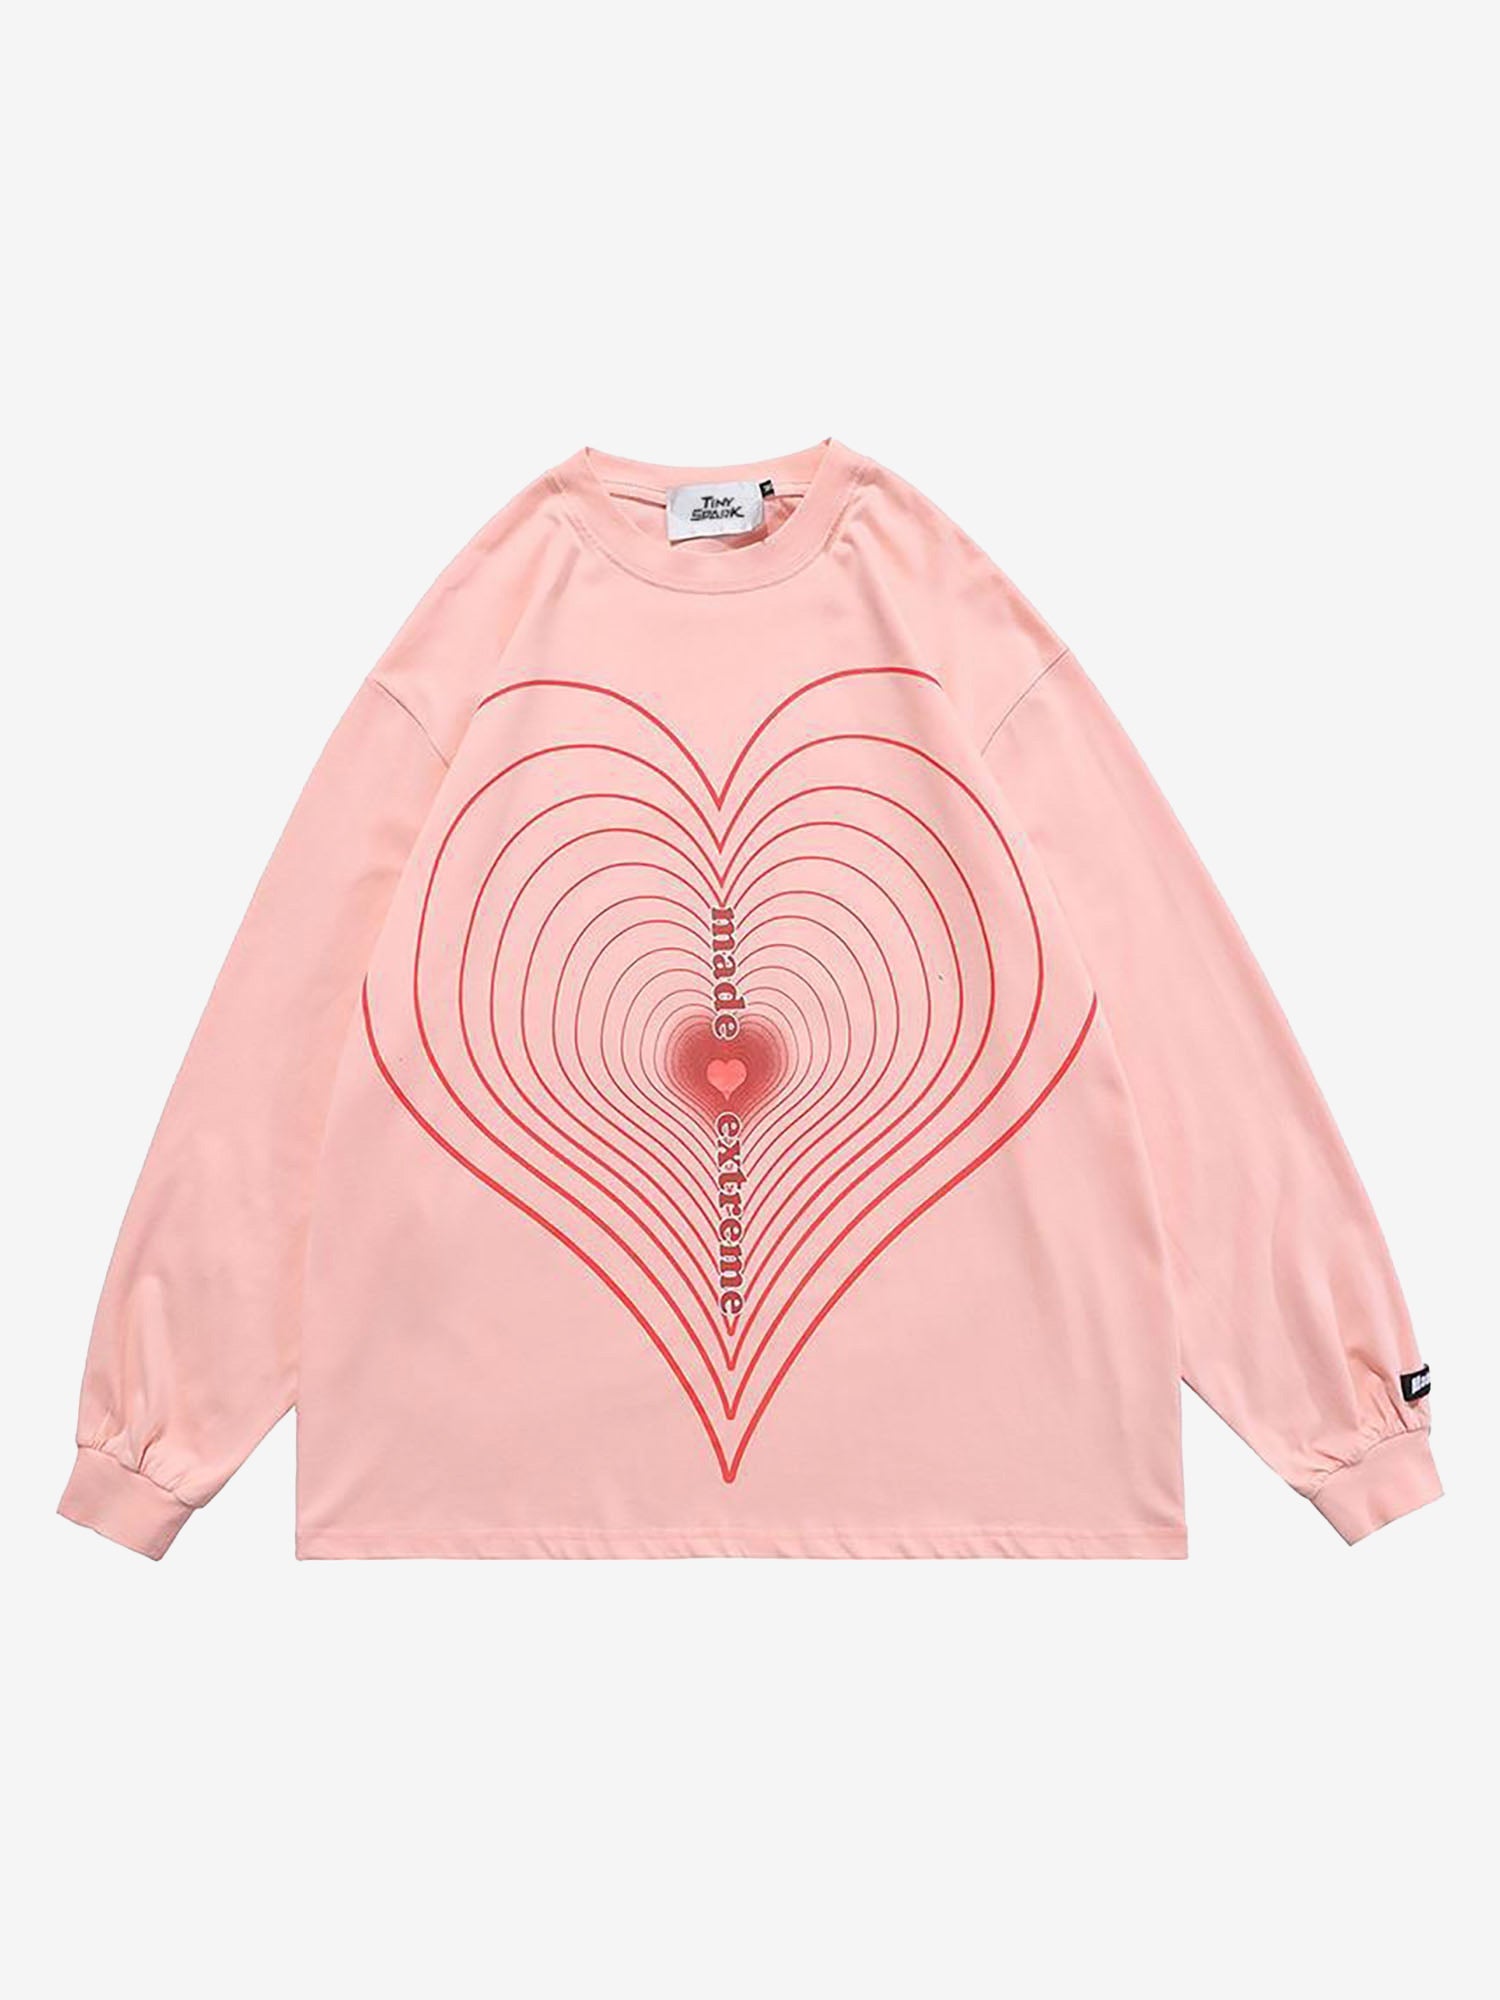 JUSTNOTAG Heart-shaped microcosm Letter Long Sleeve Sweatshirt